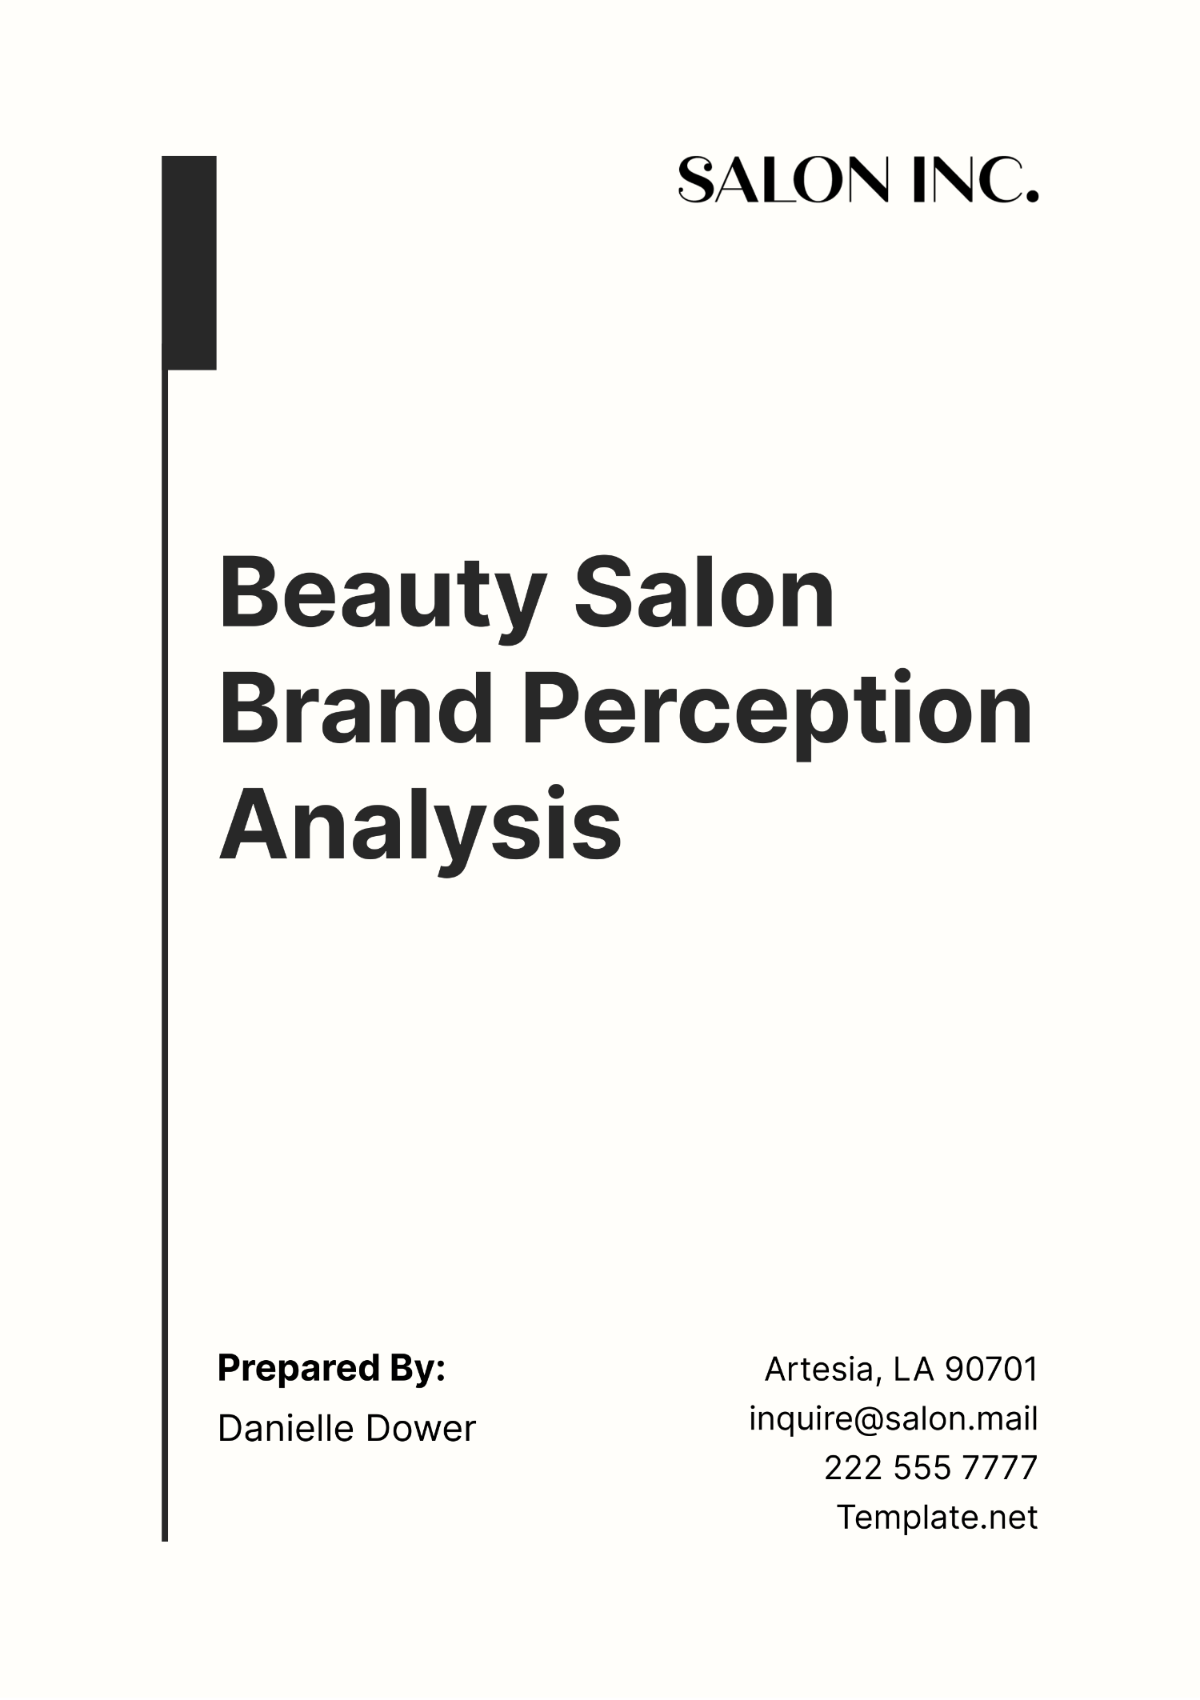 Beauty Salon Brand Perception Analysis Template